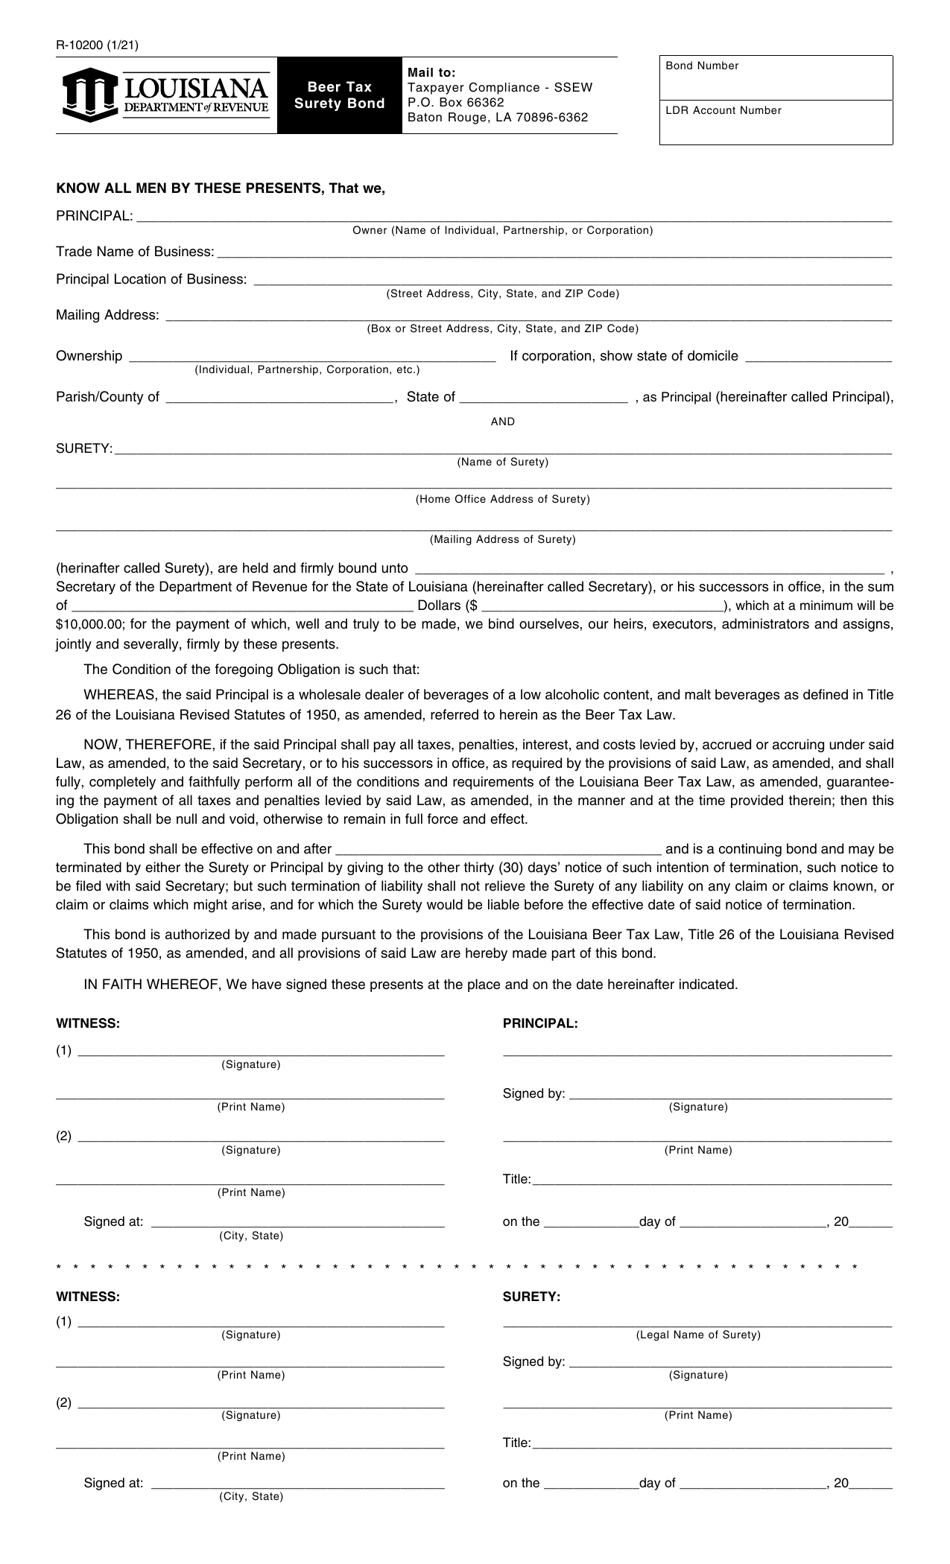 Form R-10200 Beer Tax Surety Bond - Louisiana, Page 1